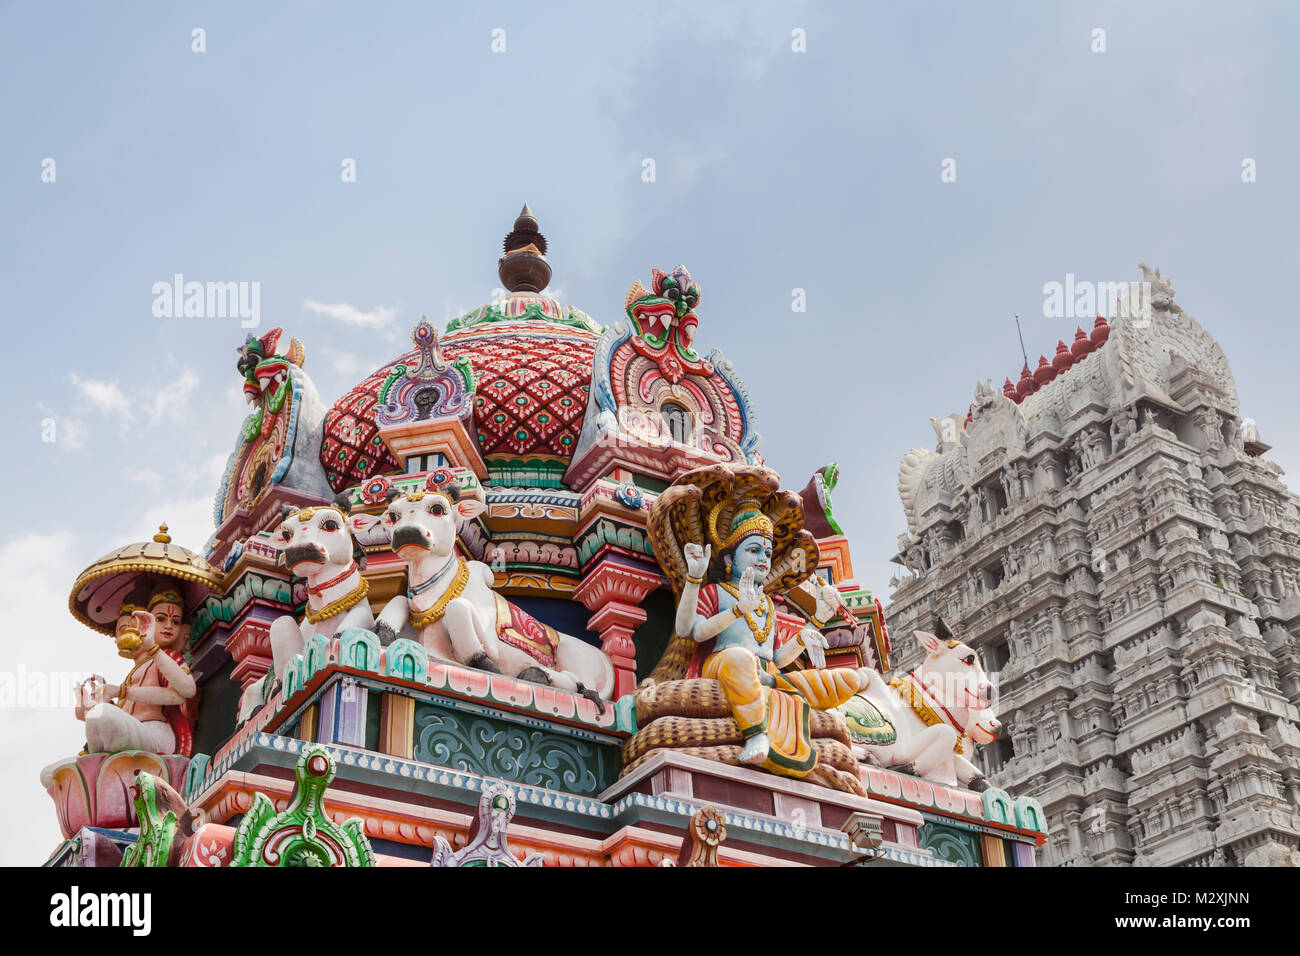 India, Tamil Nadu, Tirukalukundram, Vedagiriswarar Temple Stock Photo